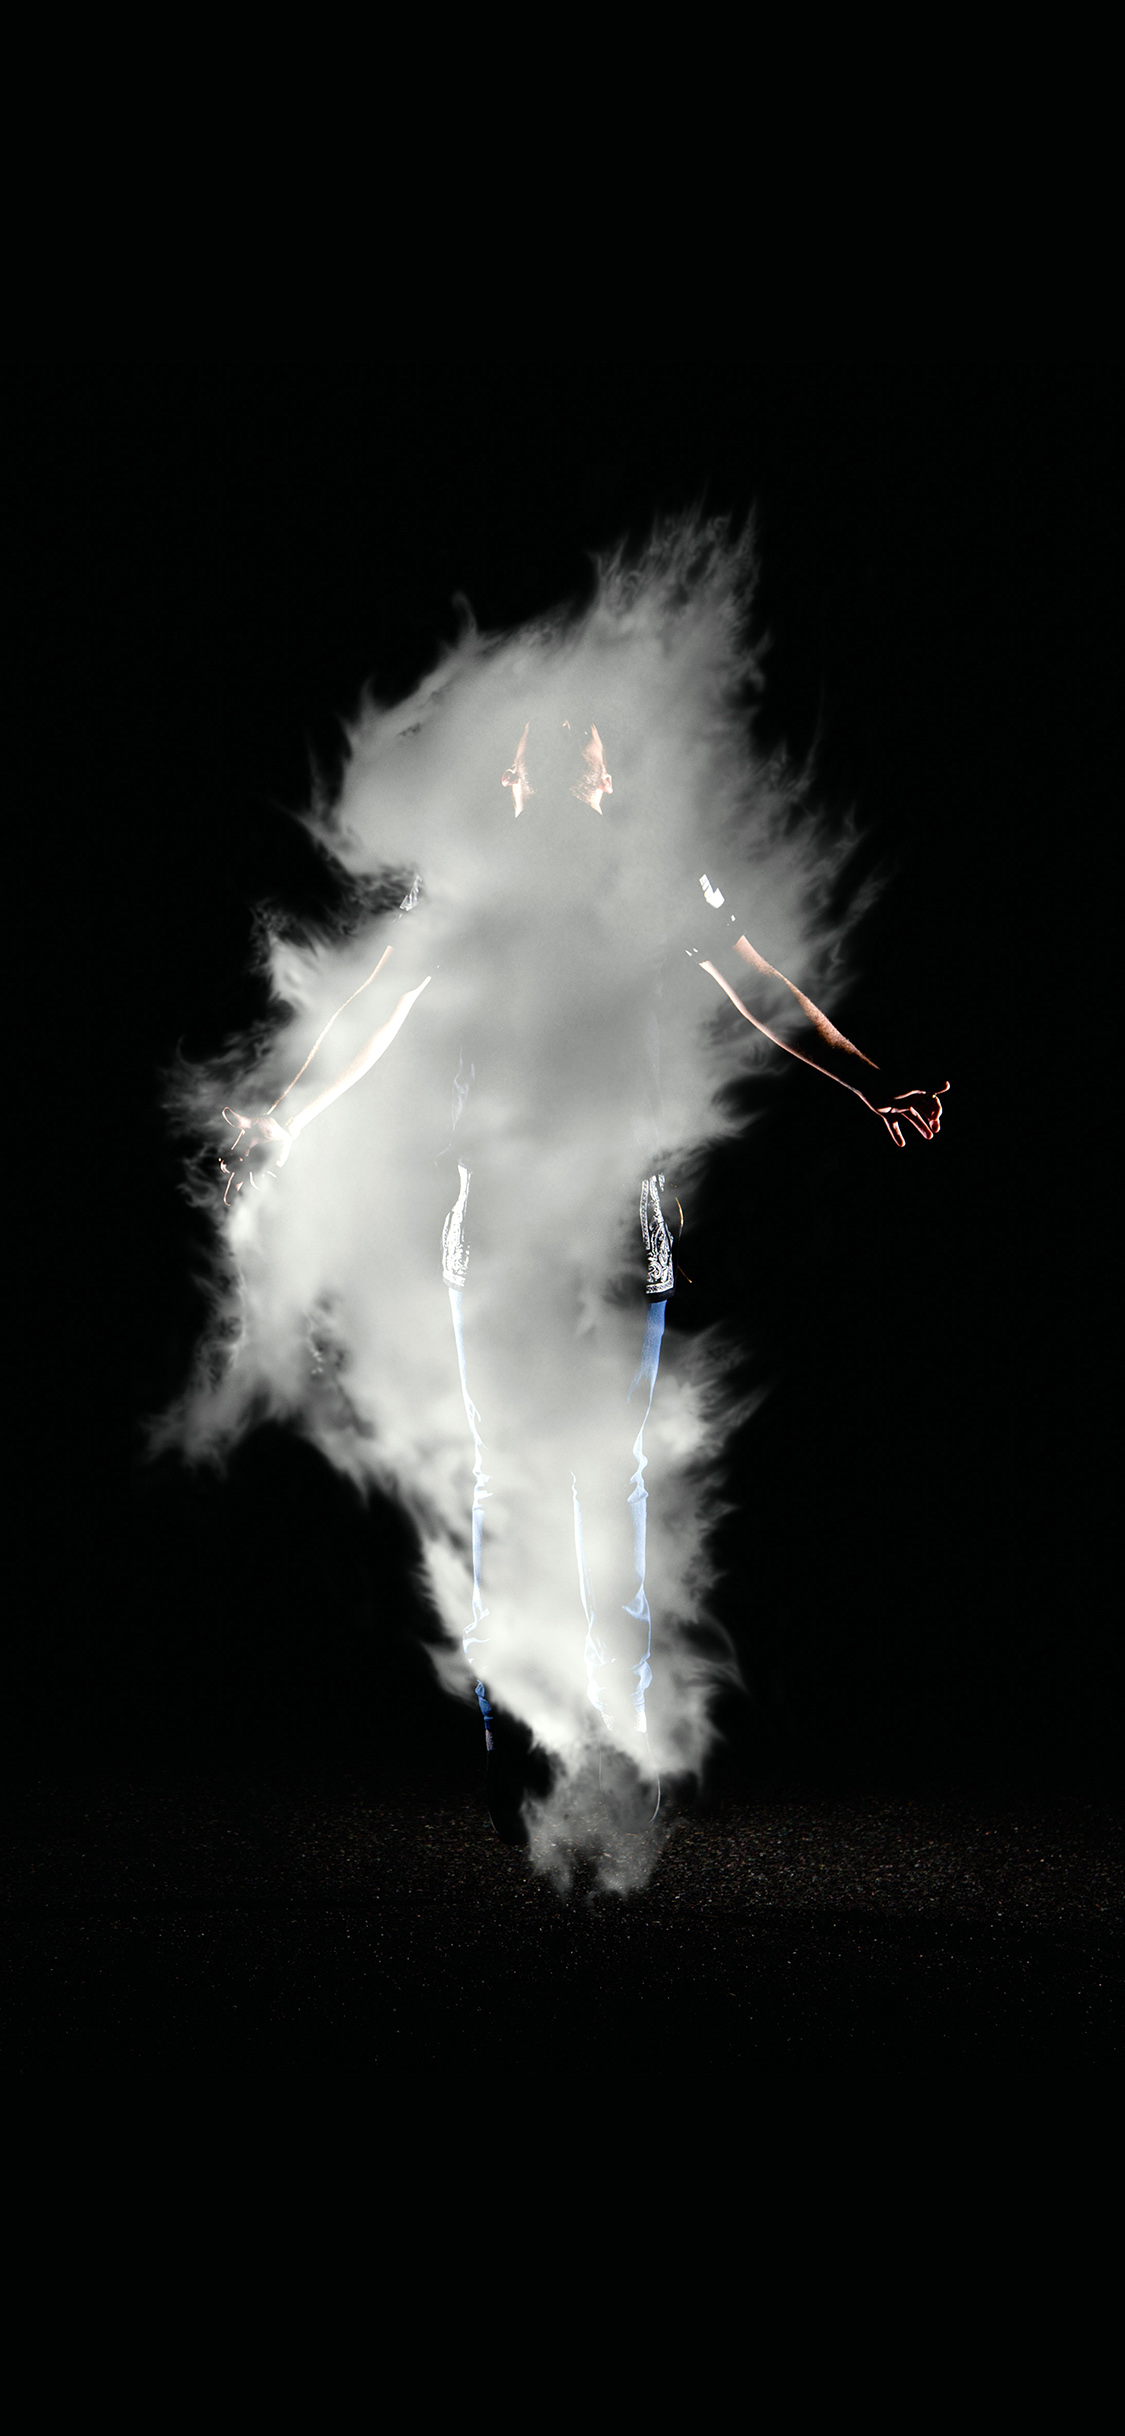 iPhone X wallpaper. man dark smoke illustration art black